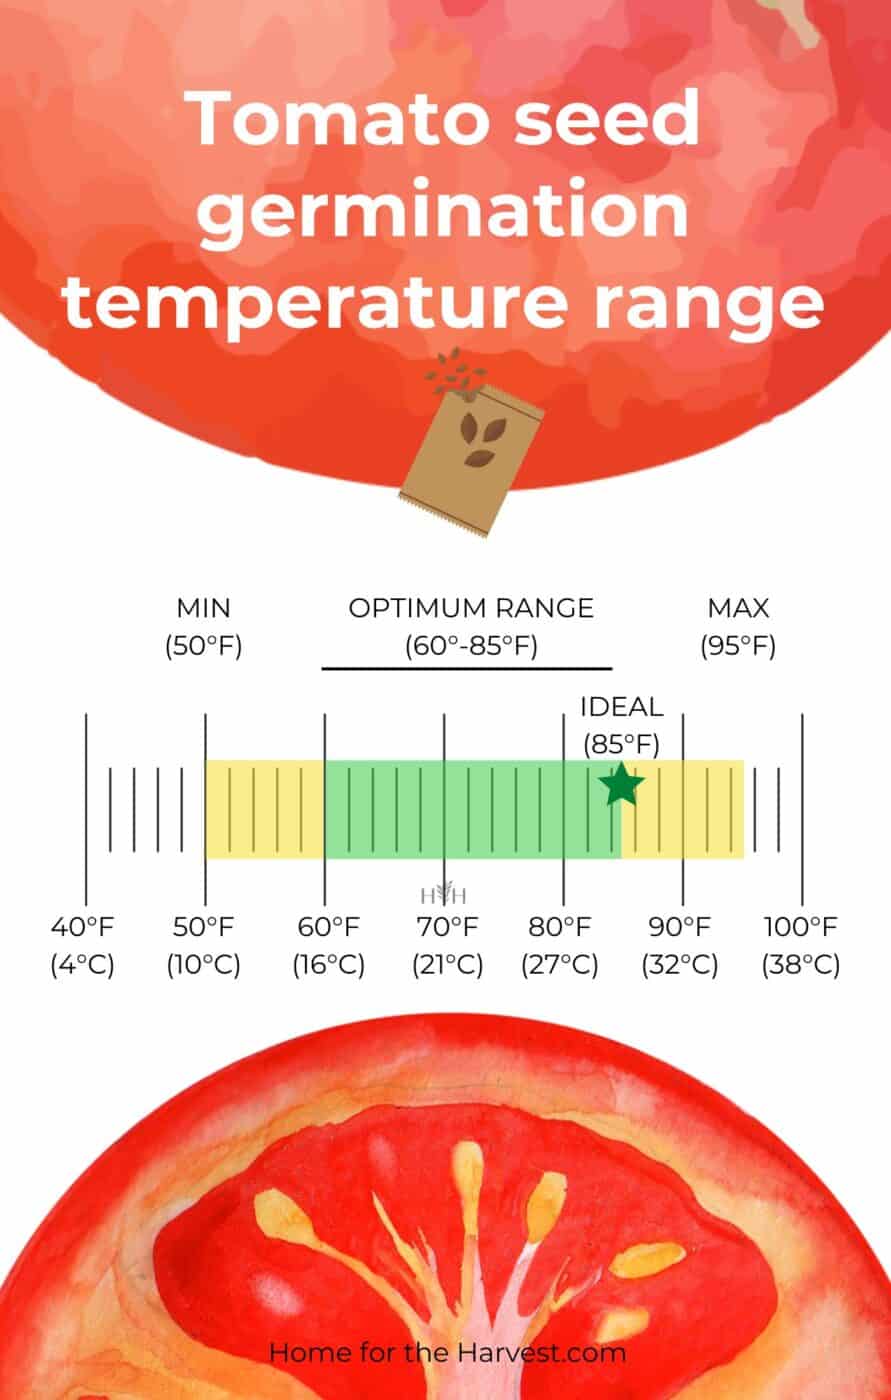 Tomato seed germination temperature range